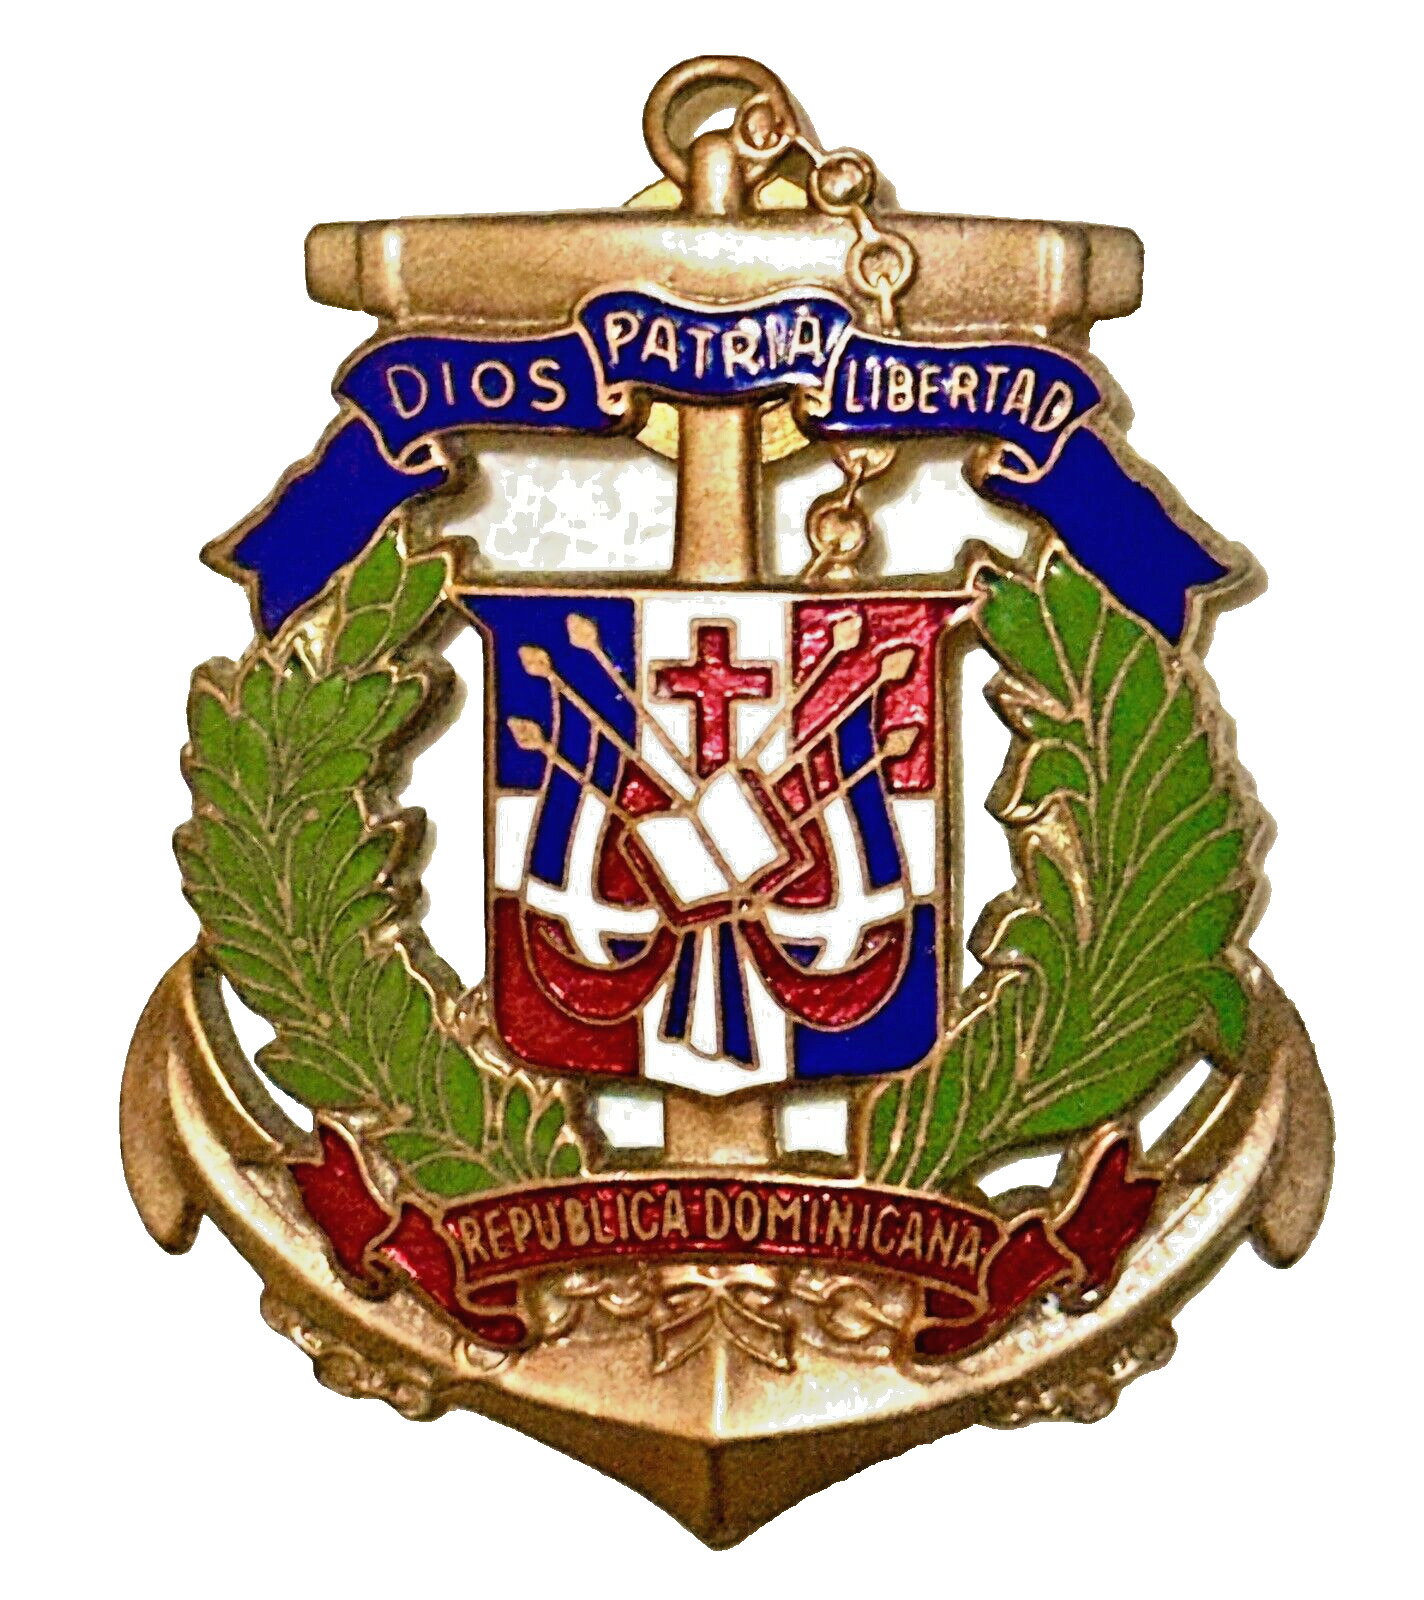 VINTAGE Officer's Cap Badge - Dominican Republic - Authentic - Trujillo Dictator